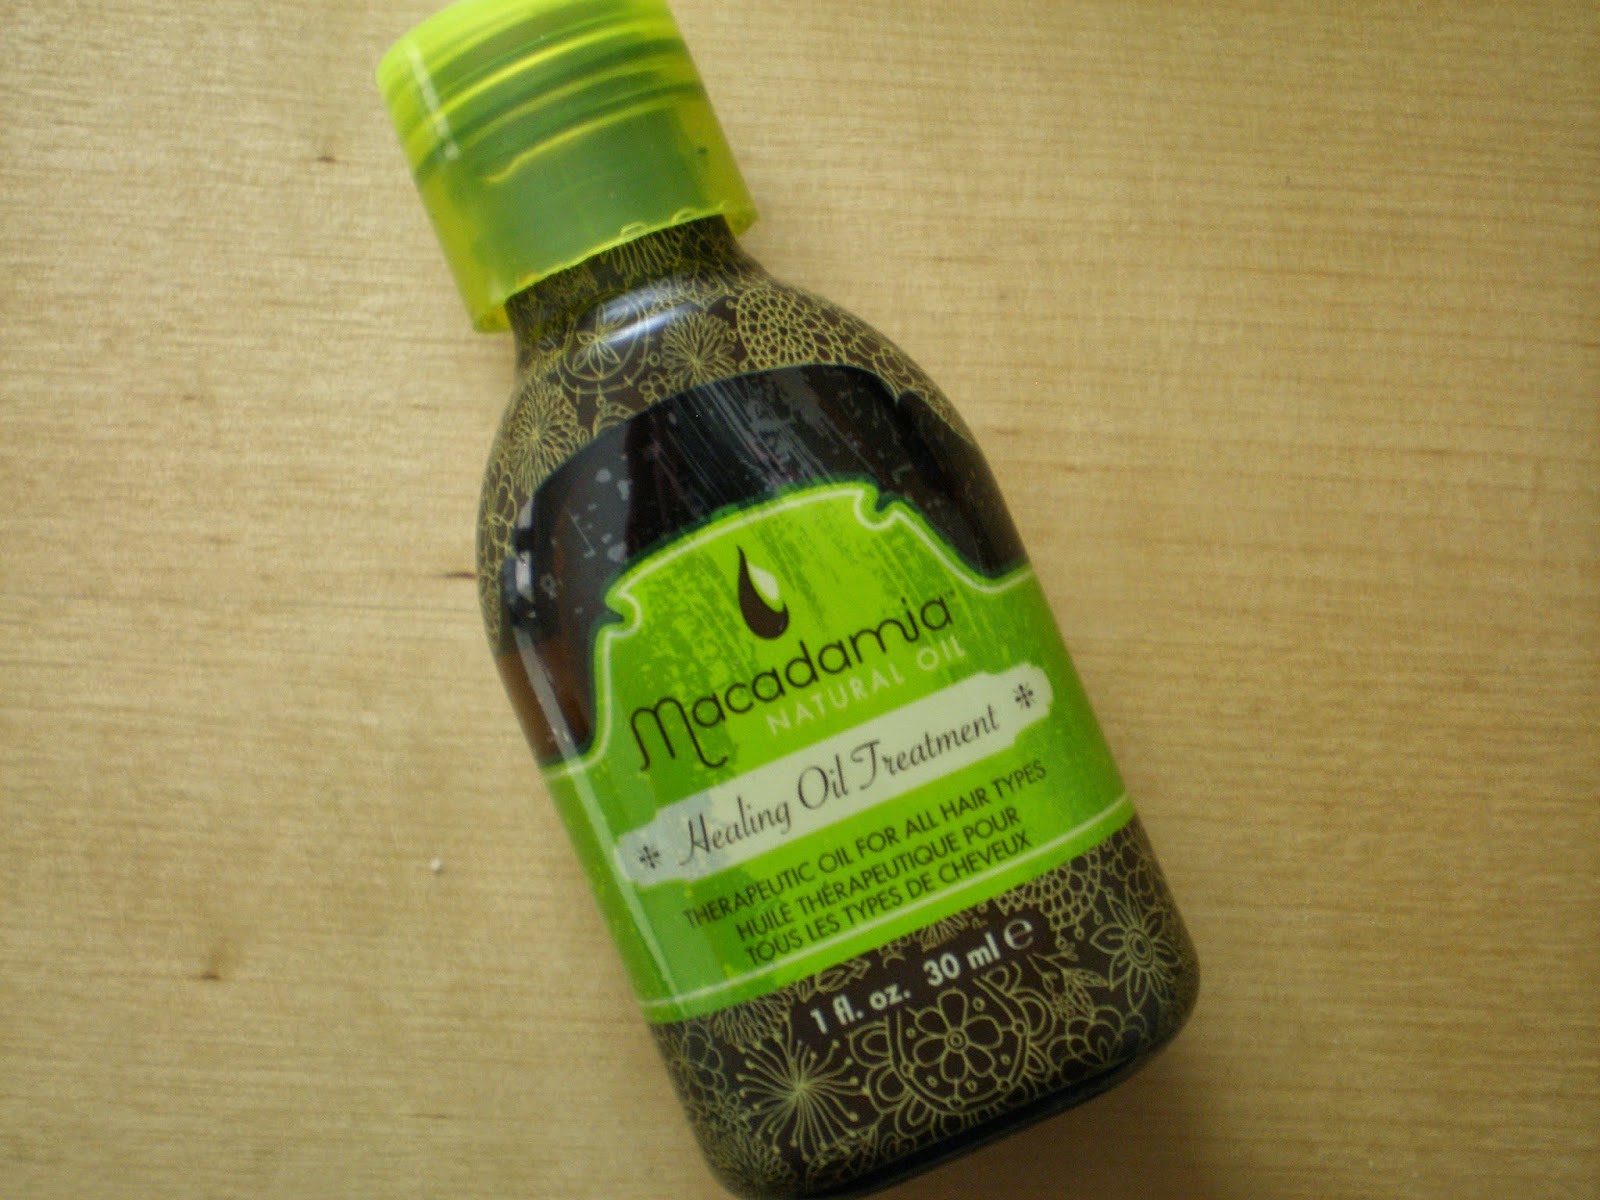 Macadamia Natural Oil healing oil treatment